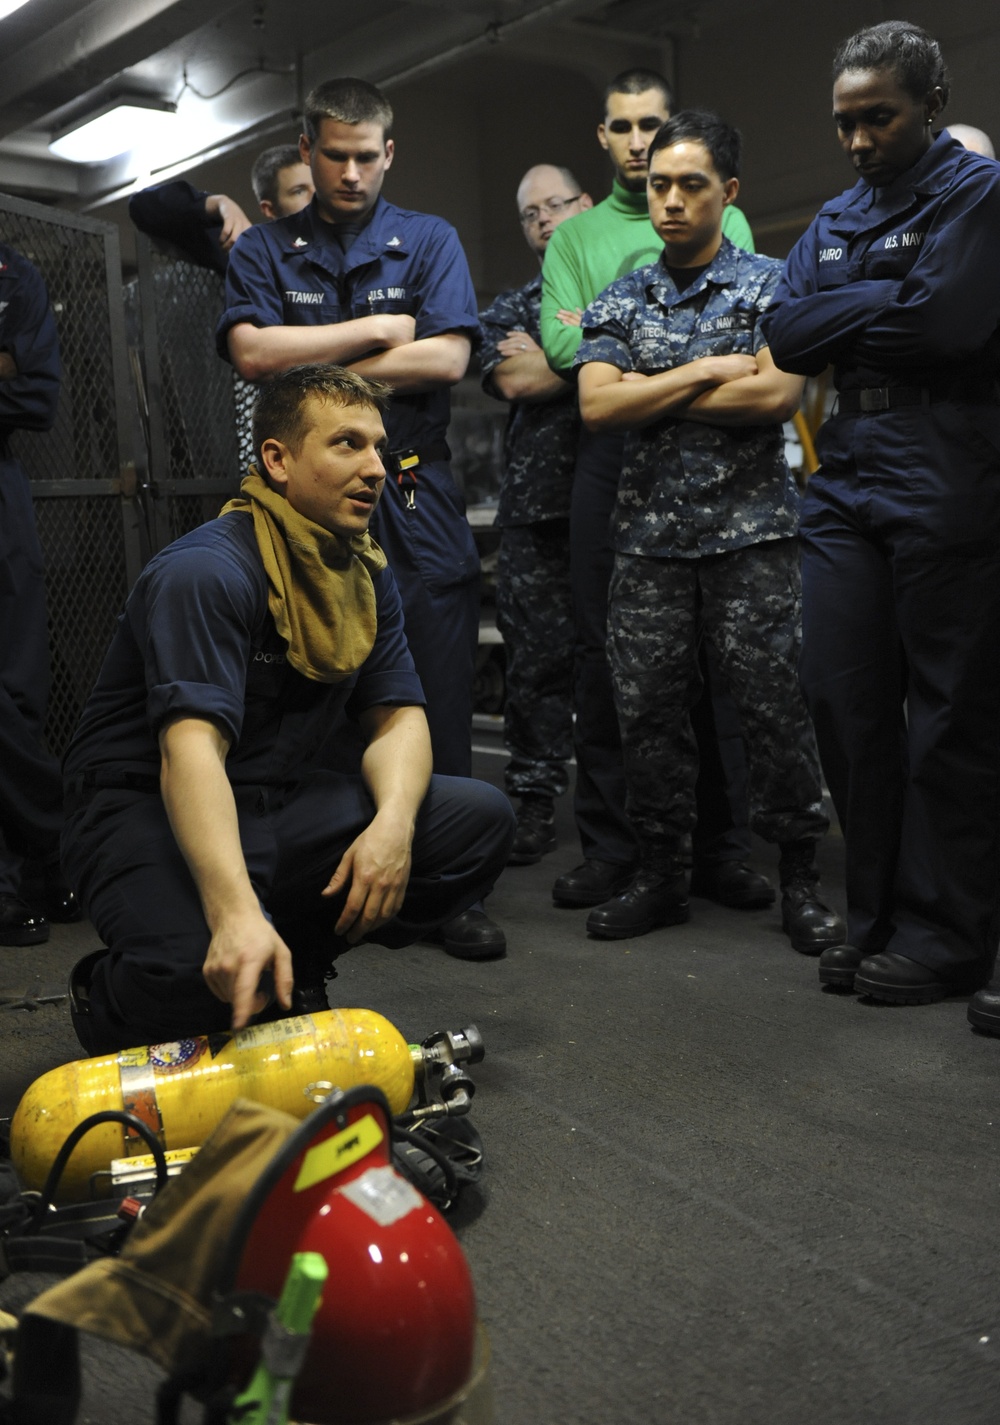 USS Nimitz sailor demonstrates proper use of equipment